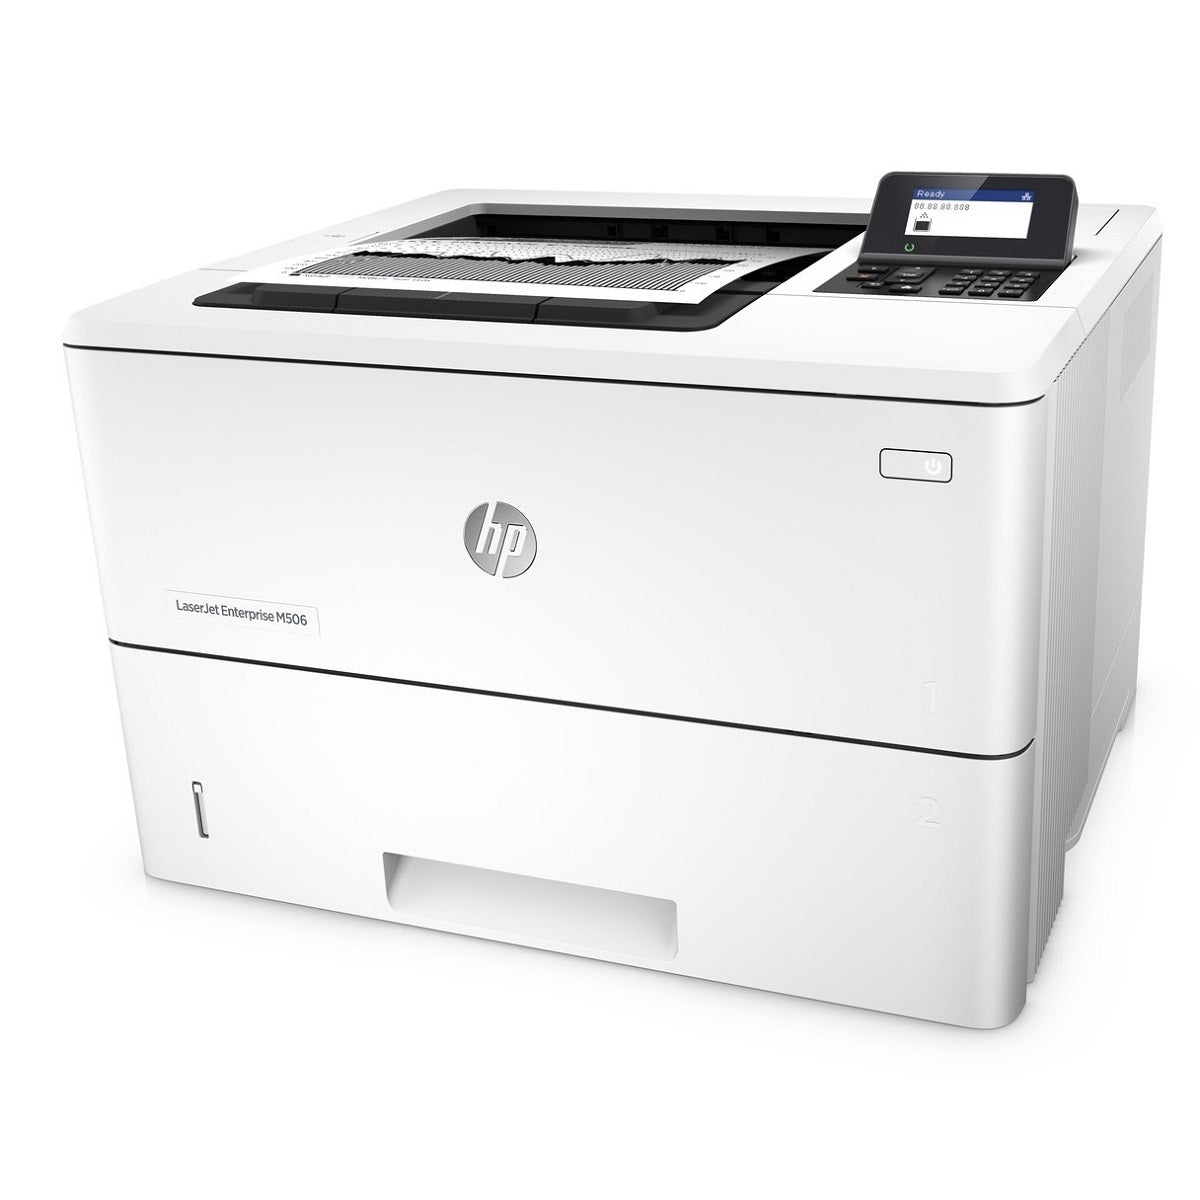 Absolute Toner HP LaserJet Enterprise M506 Monochrome Laser Printer, For Office, Home Use | 4-Line Display With Keypad Showroom Monochrome Copiers